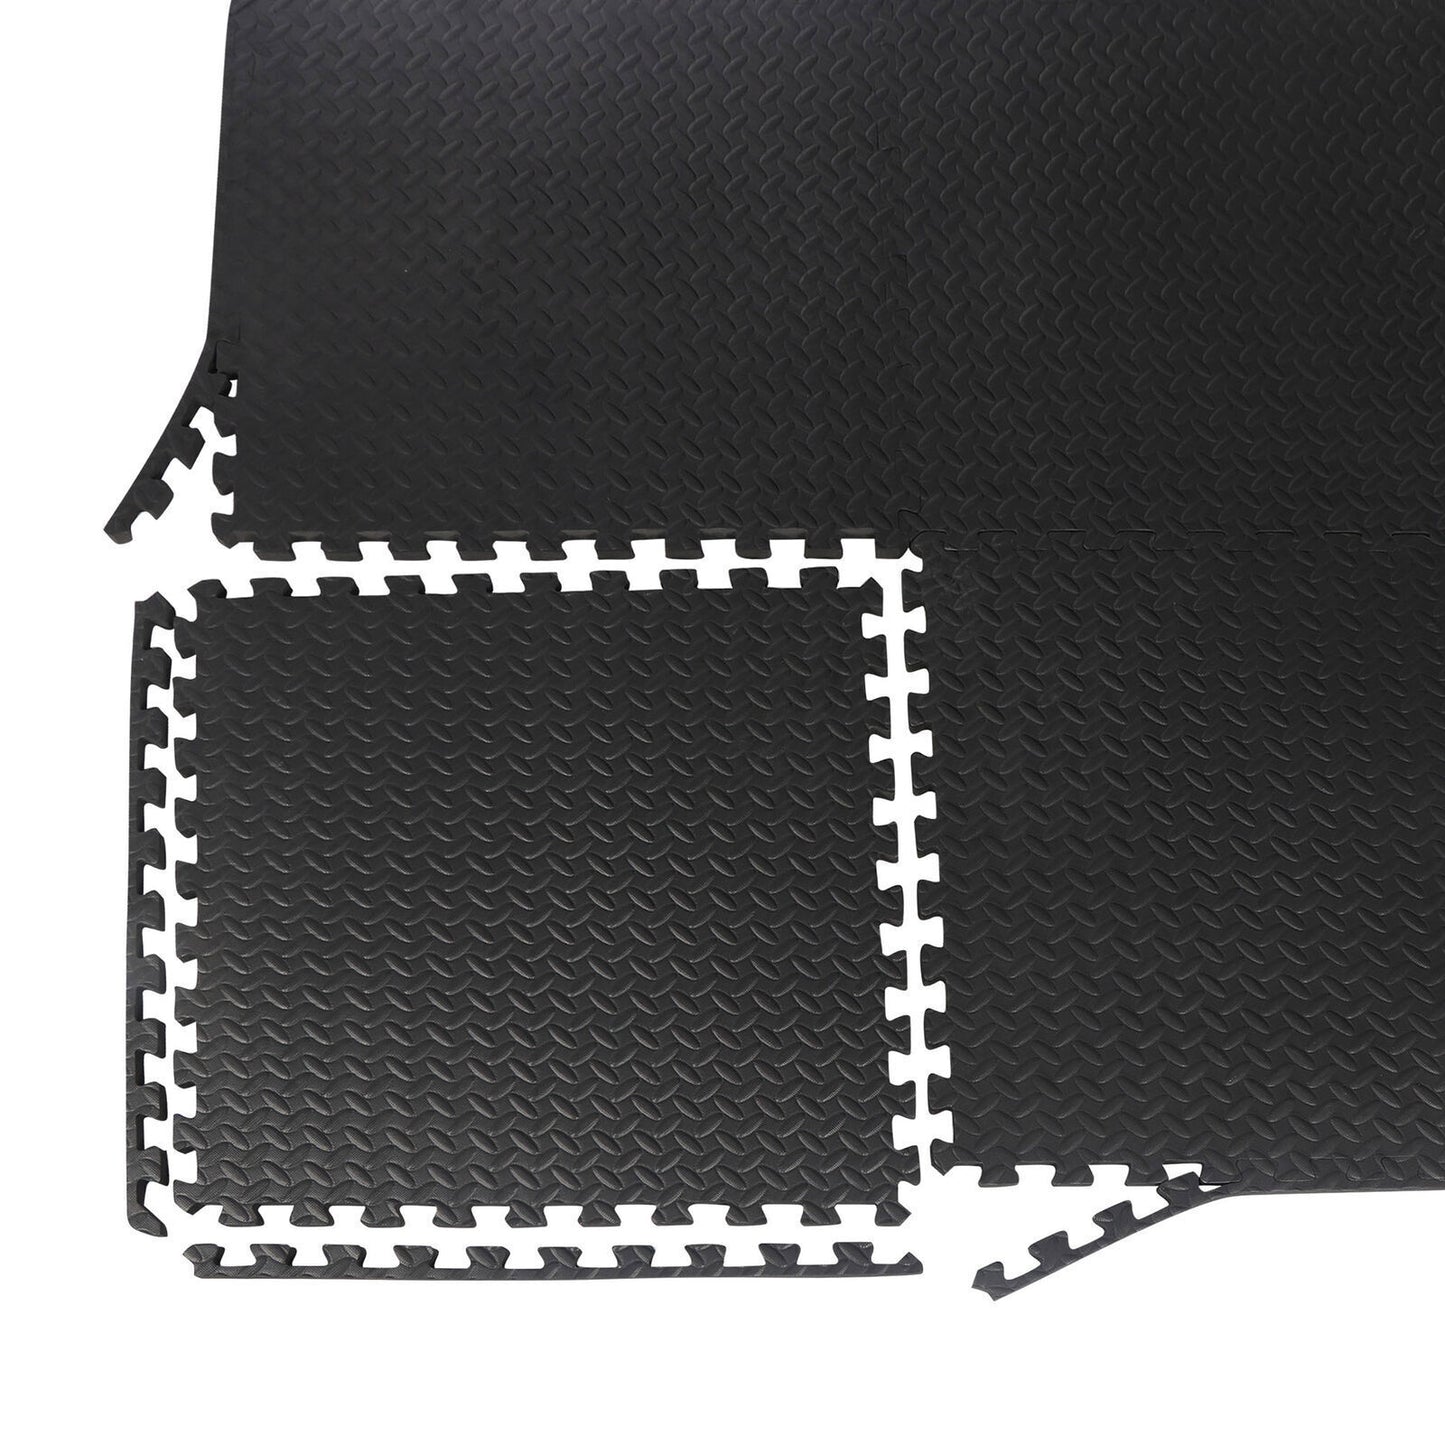 48pcs Puzzle Exercise Mat w/ EVA Foam Interlocking Tiles 96 Sq Ft GYM Home